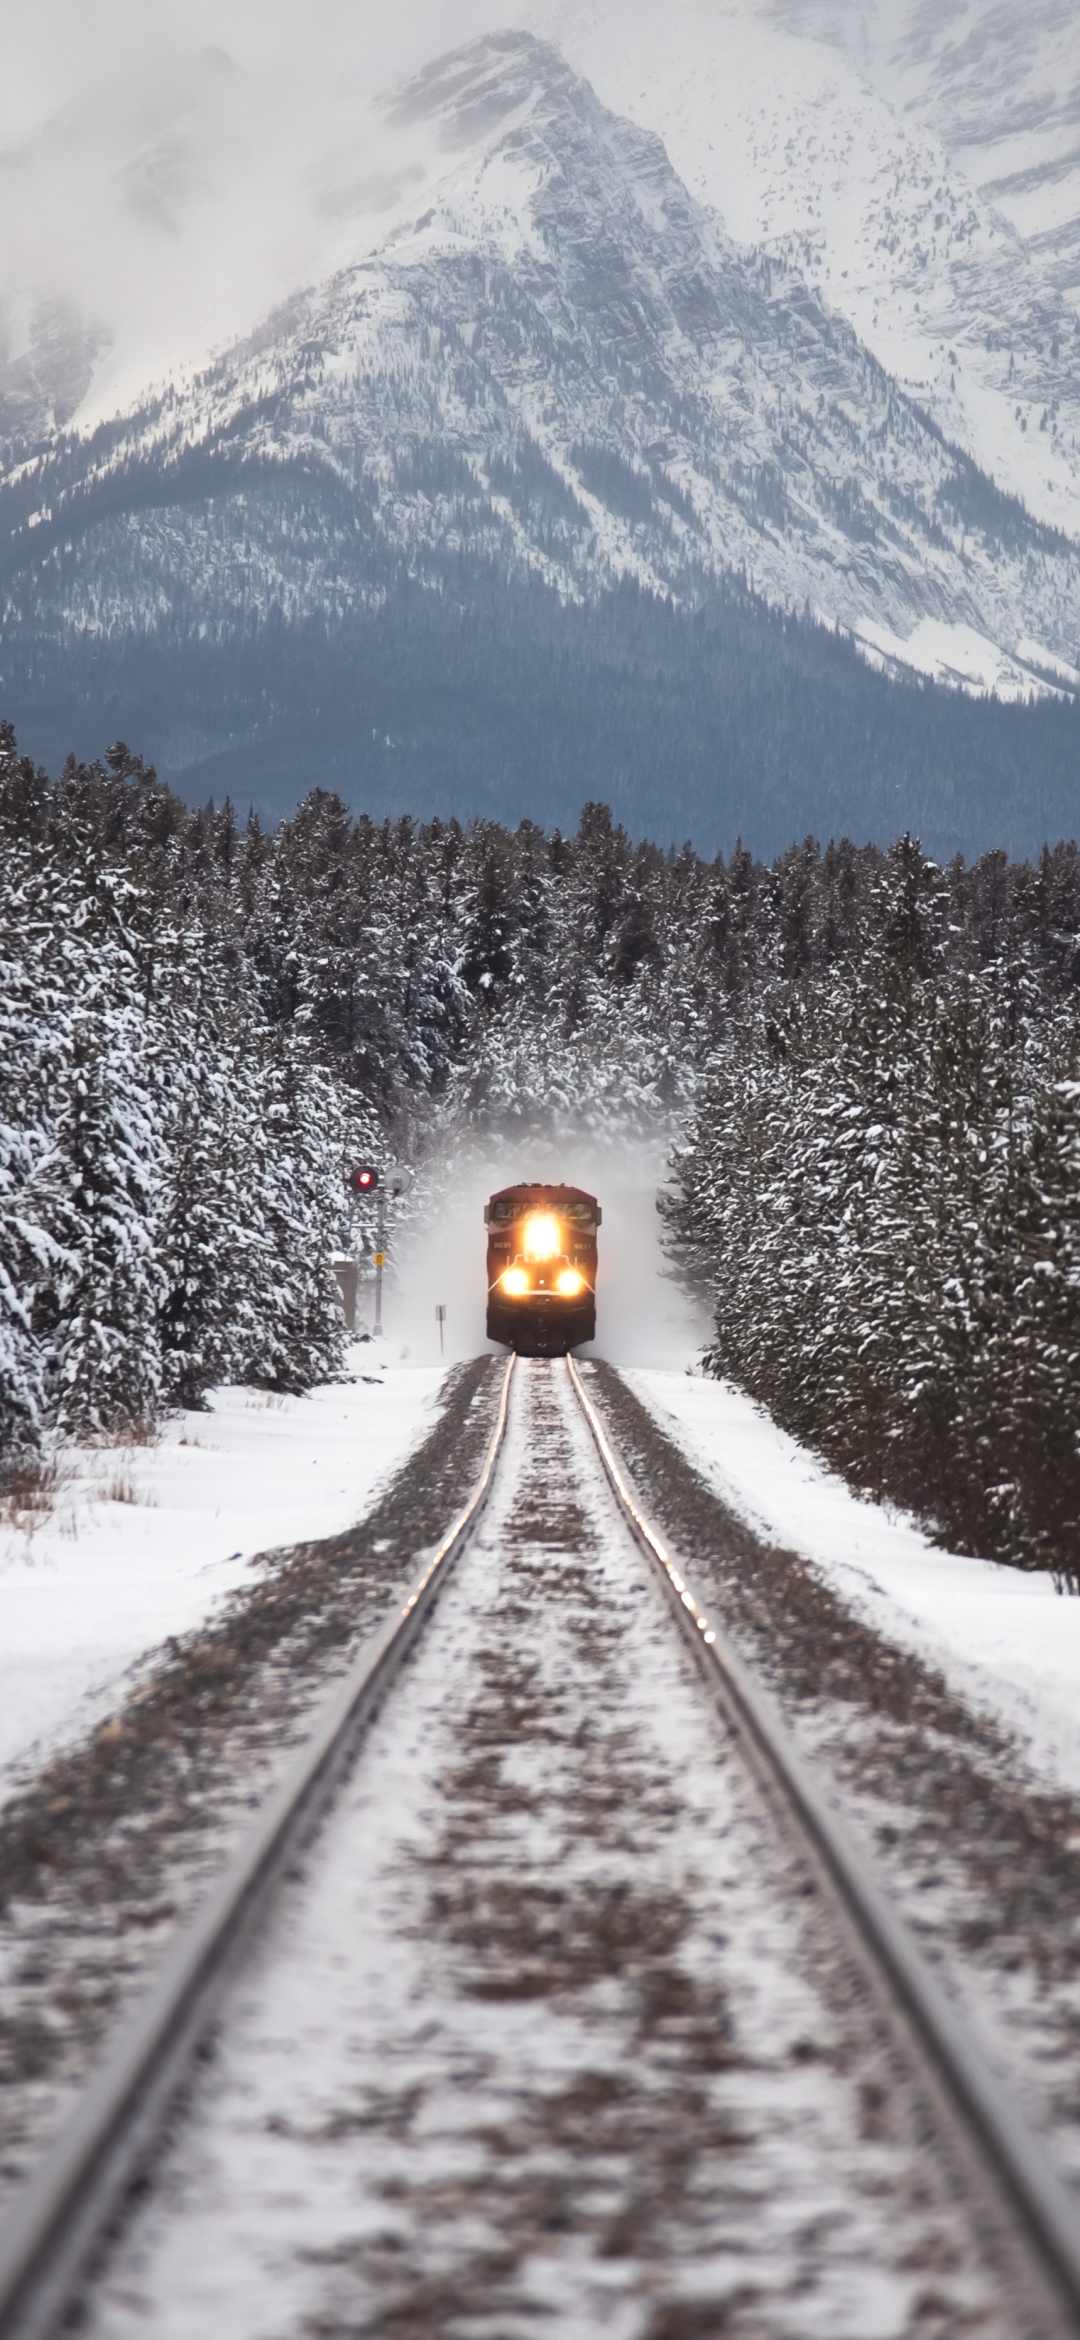 vehicles, train, snow, tracks, winter, mountain